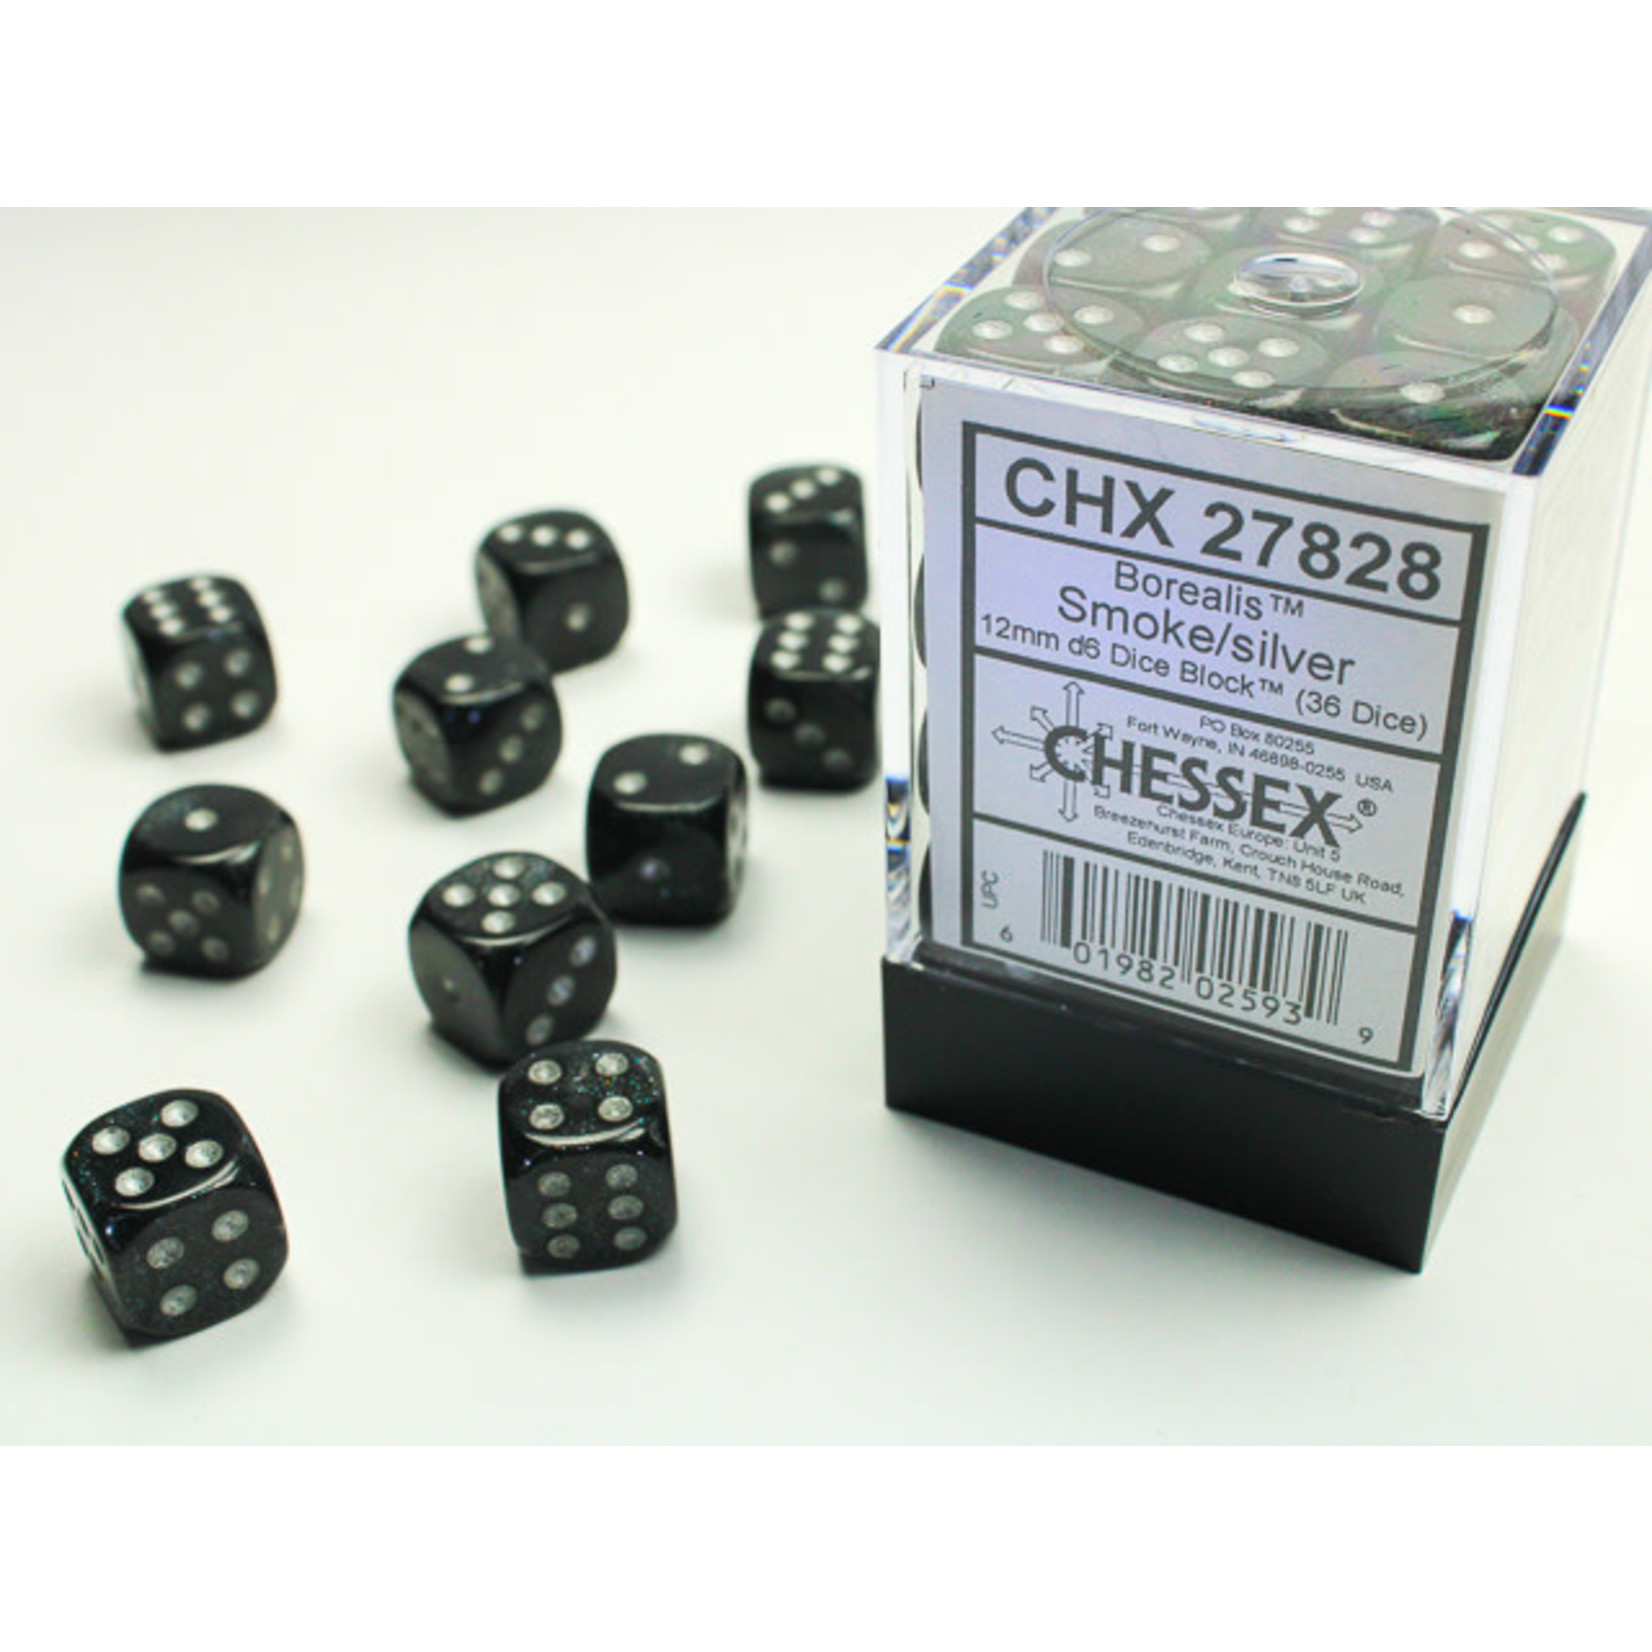 Chessex Dice 12mm 27828 36pc Borealis  Smoke/Silver